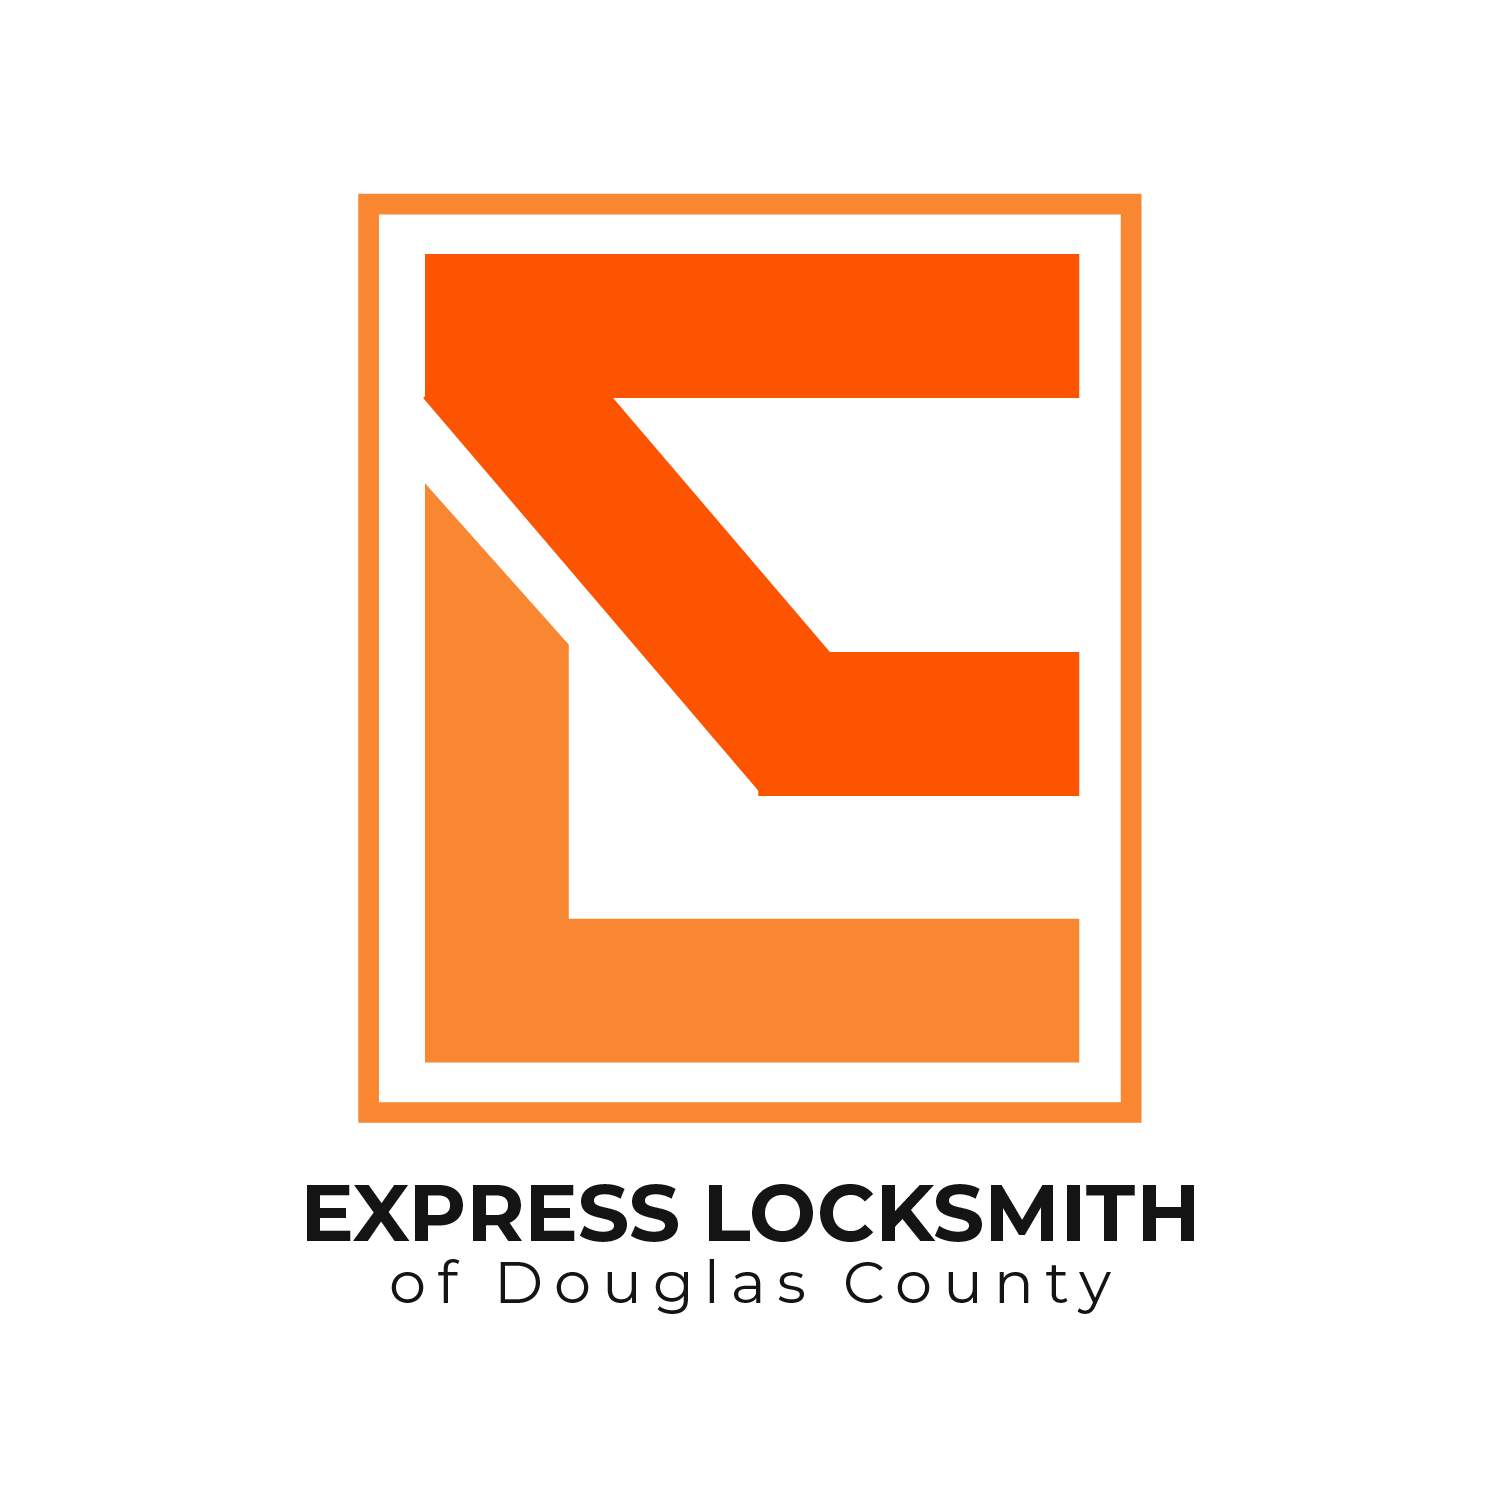 Express Locksmith of Douglas County